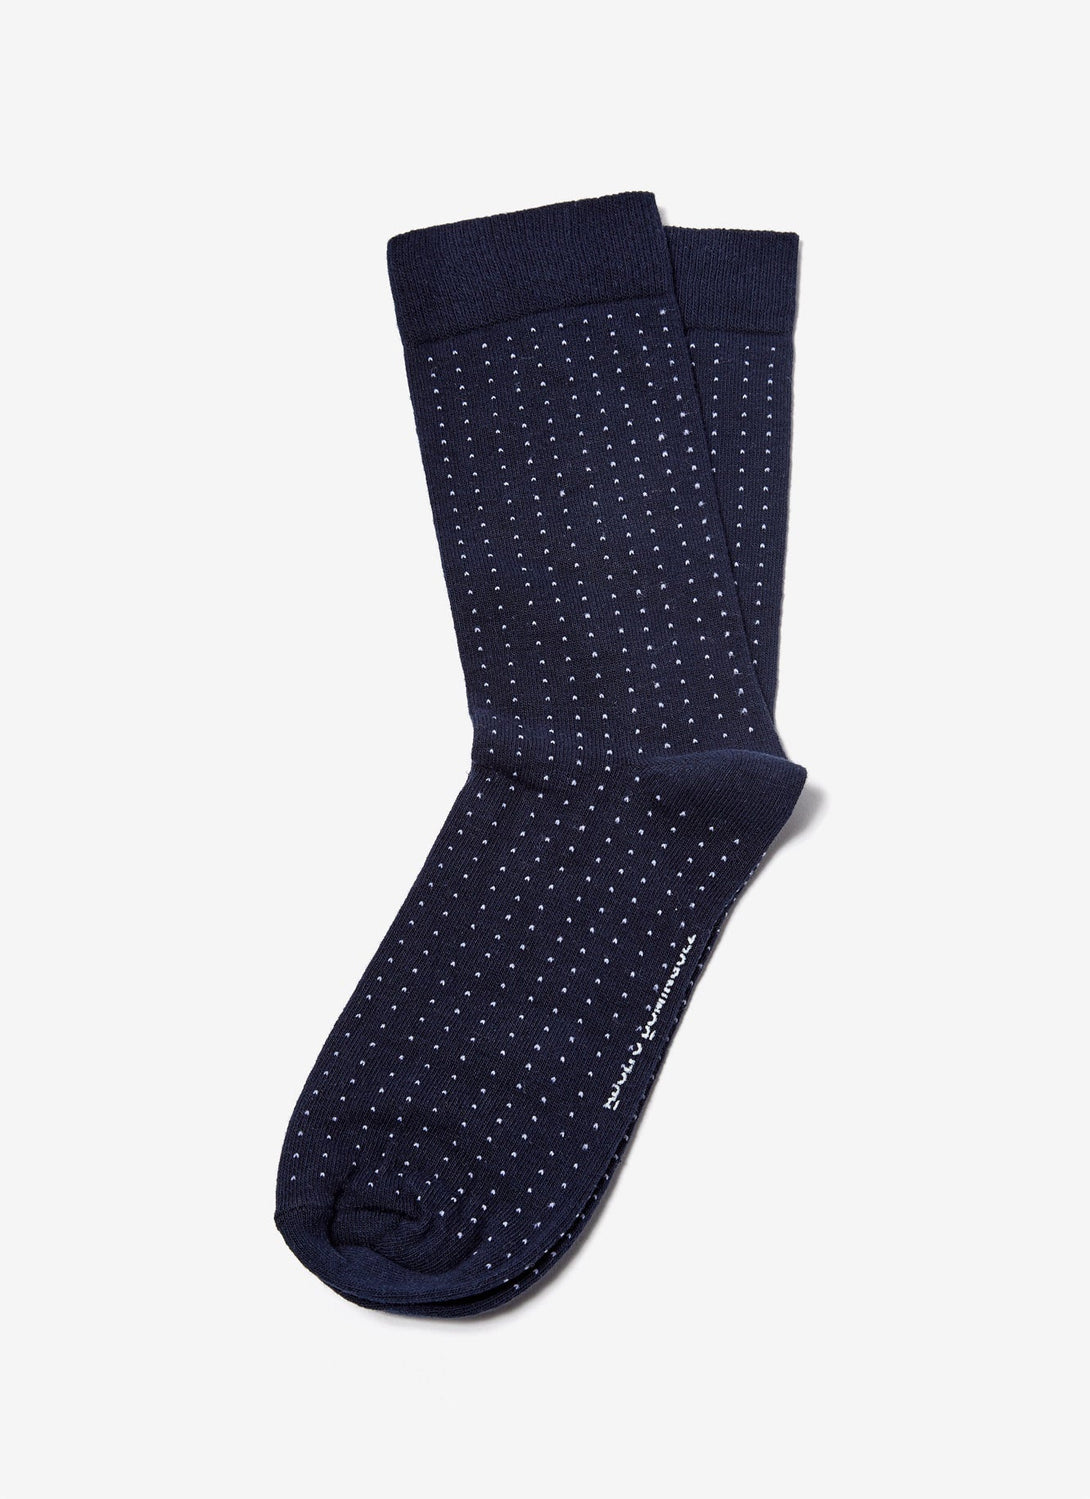 Men Socks | Blue/White Ankle Socks With Pindot Print by Spanish designer Adolfo Dominguez